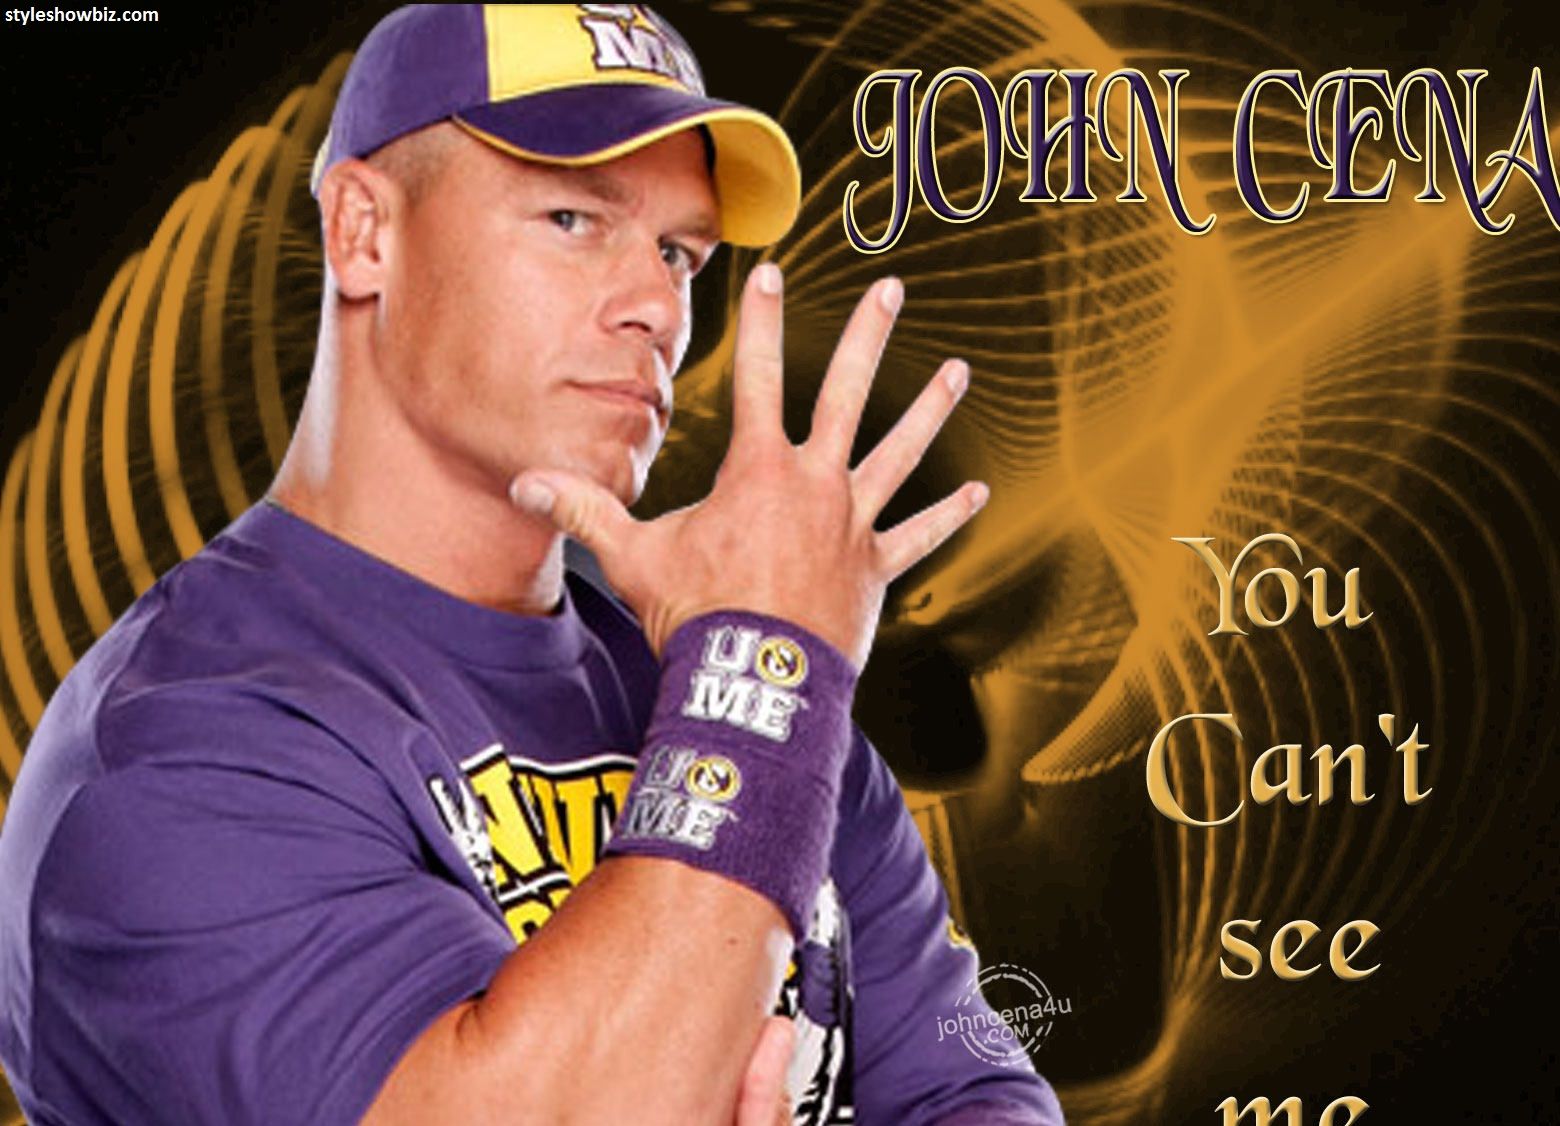 John Cena The Marine hd wallpapers ForWallpapers.com